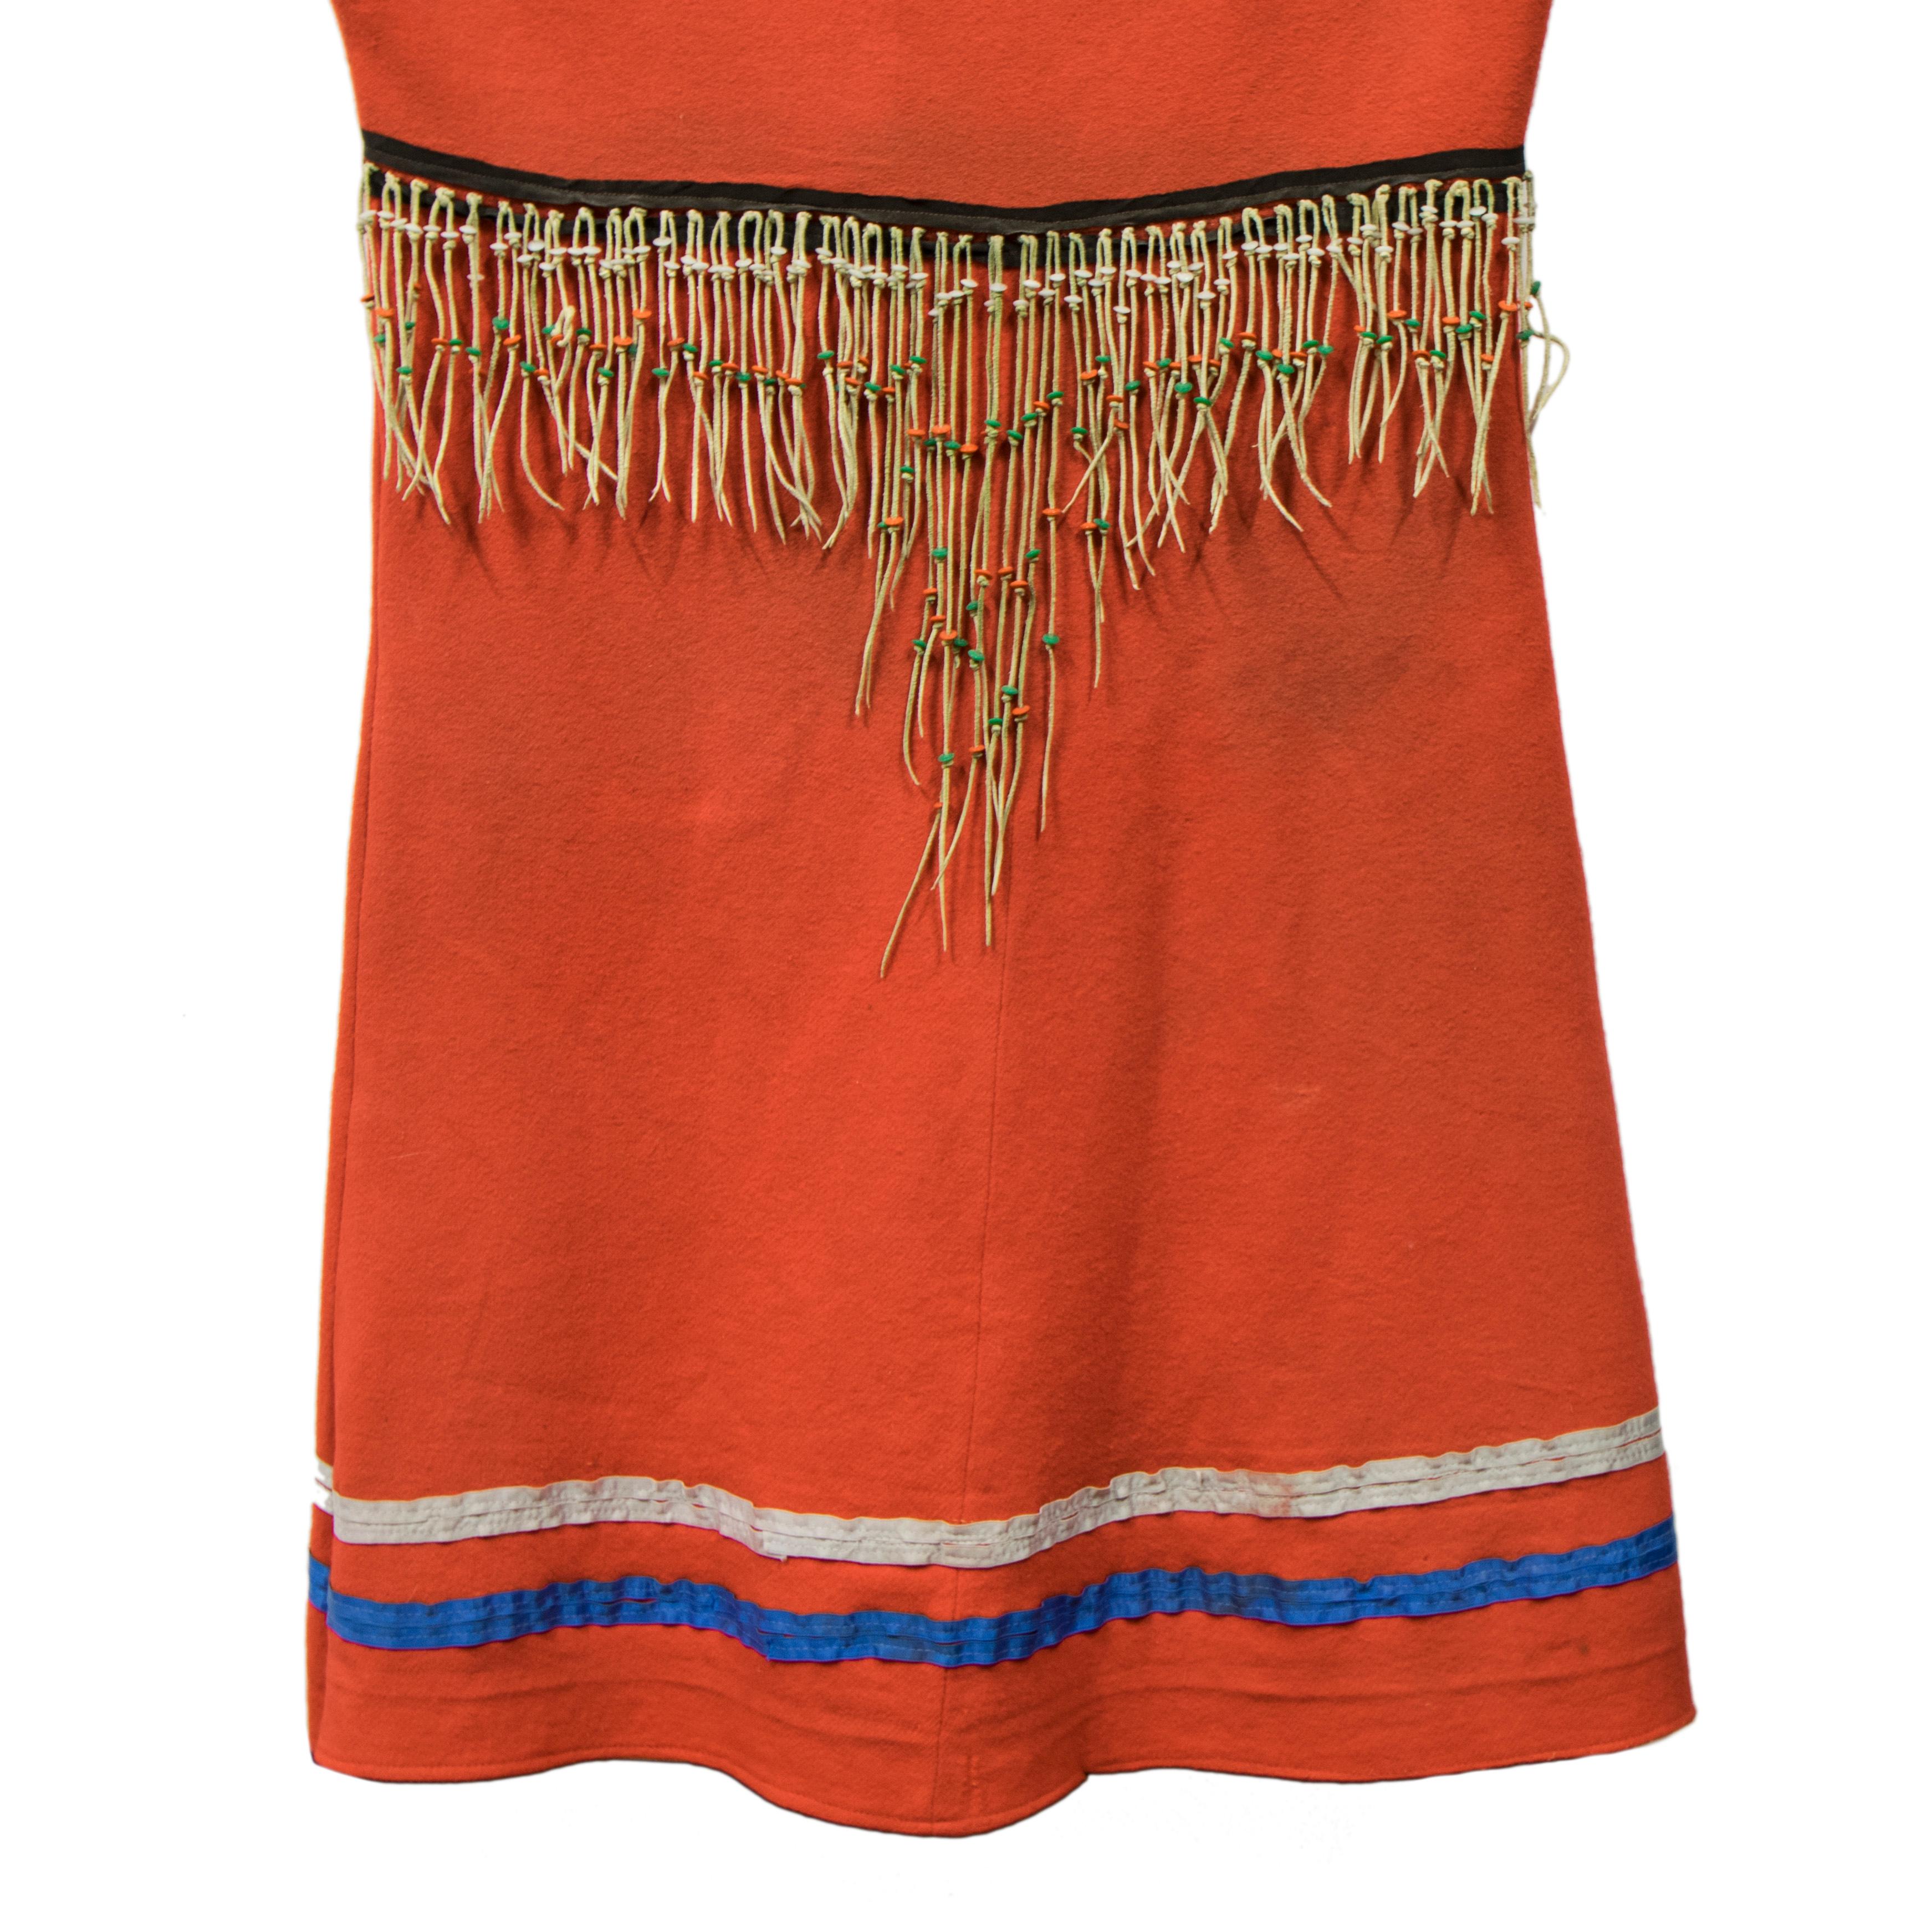 blackfoot tribe clothing